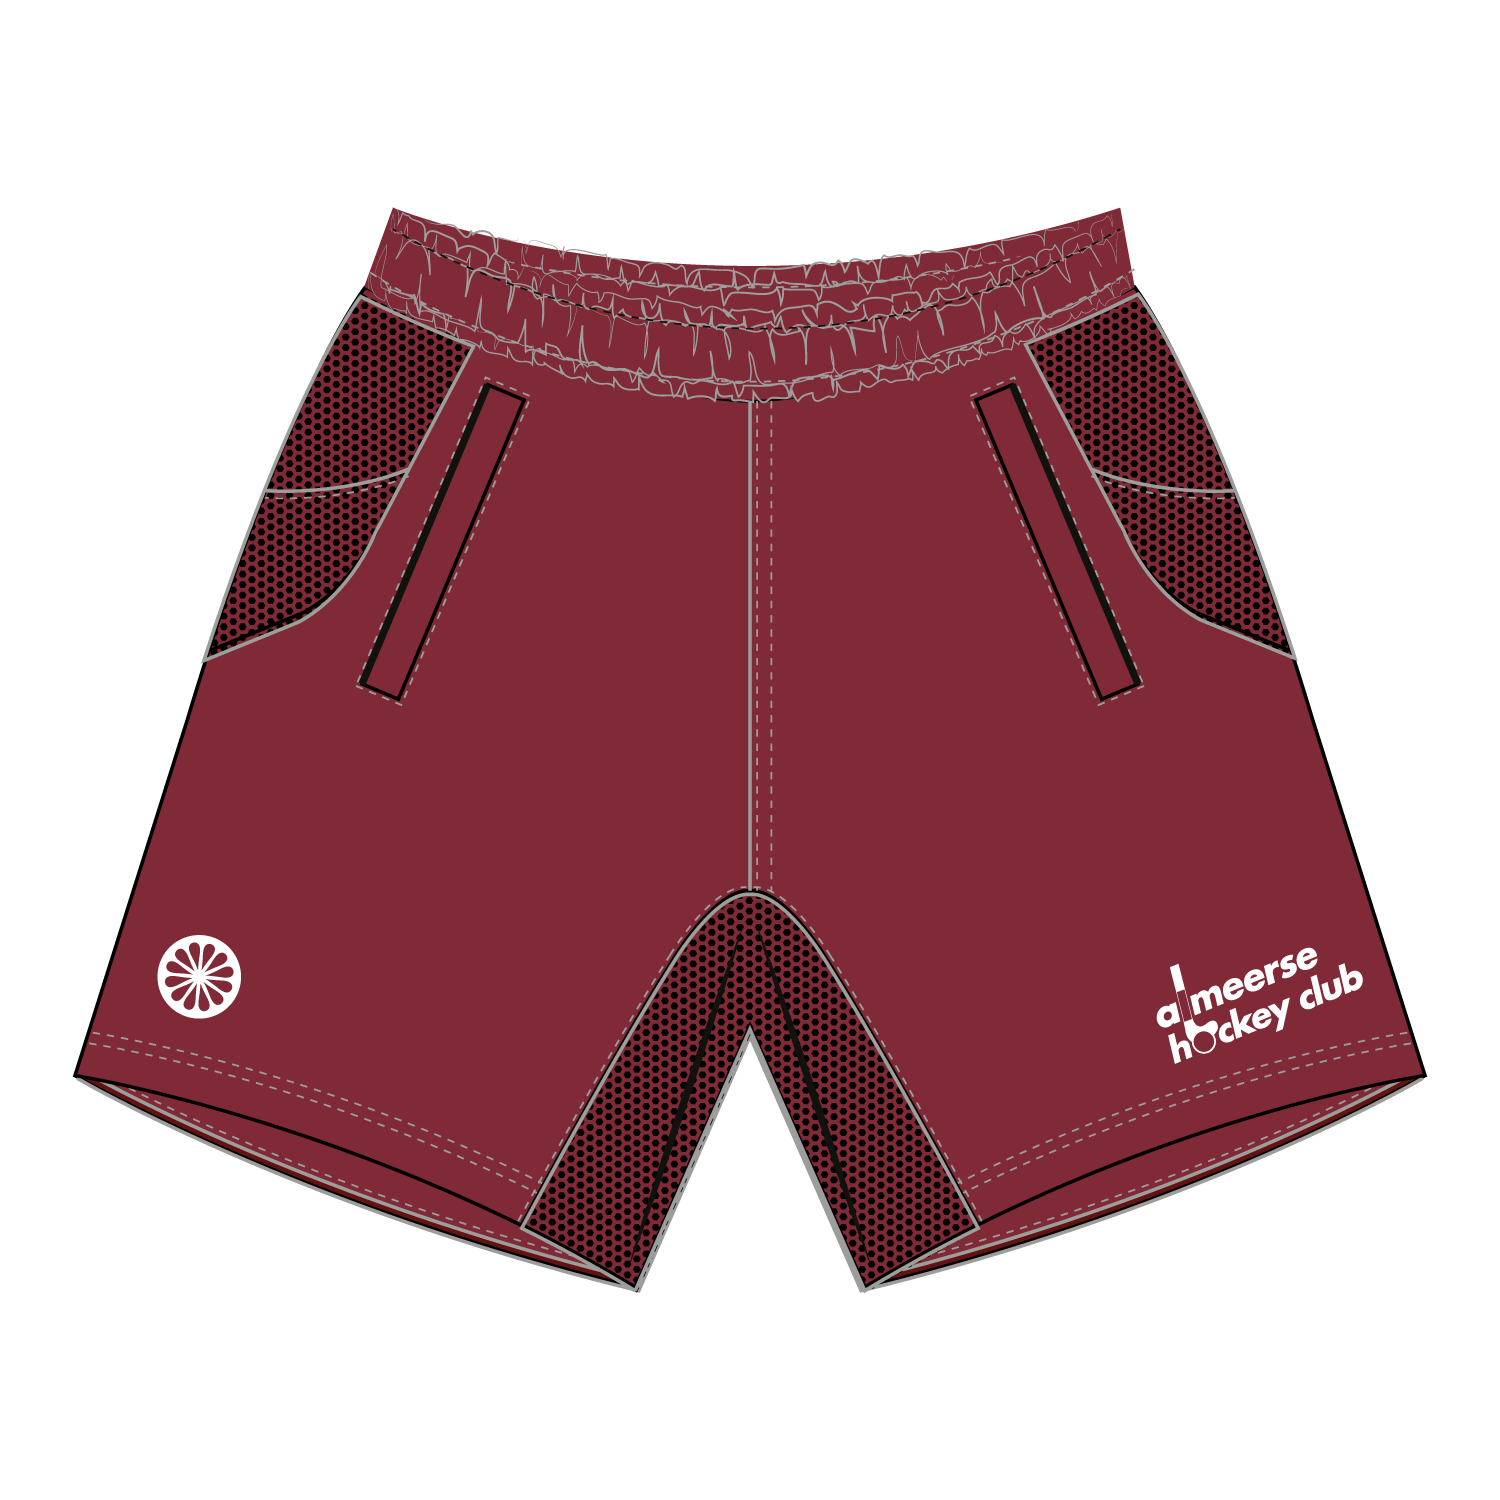 Almeerse HC - Shorts 